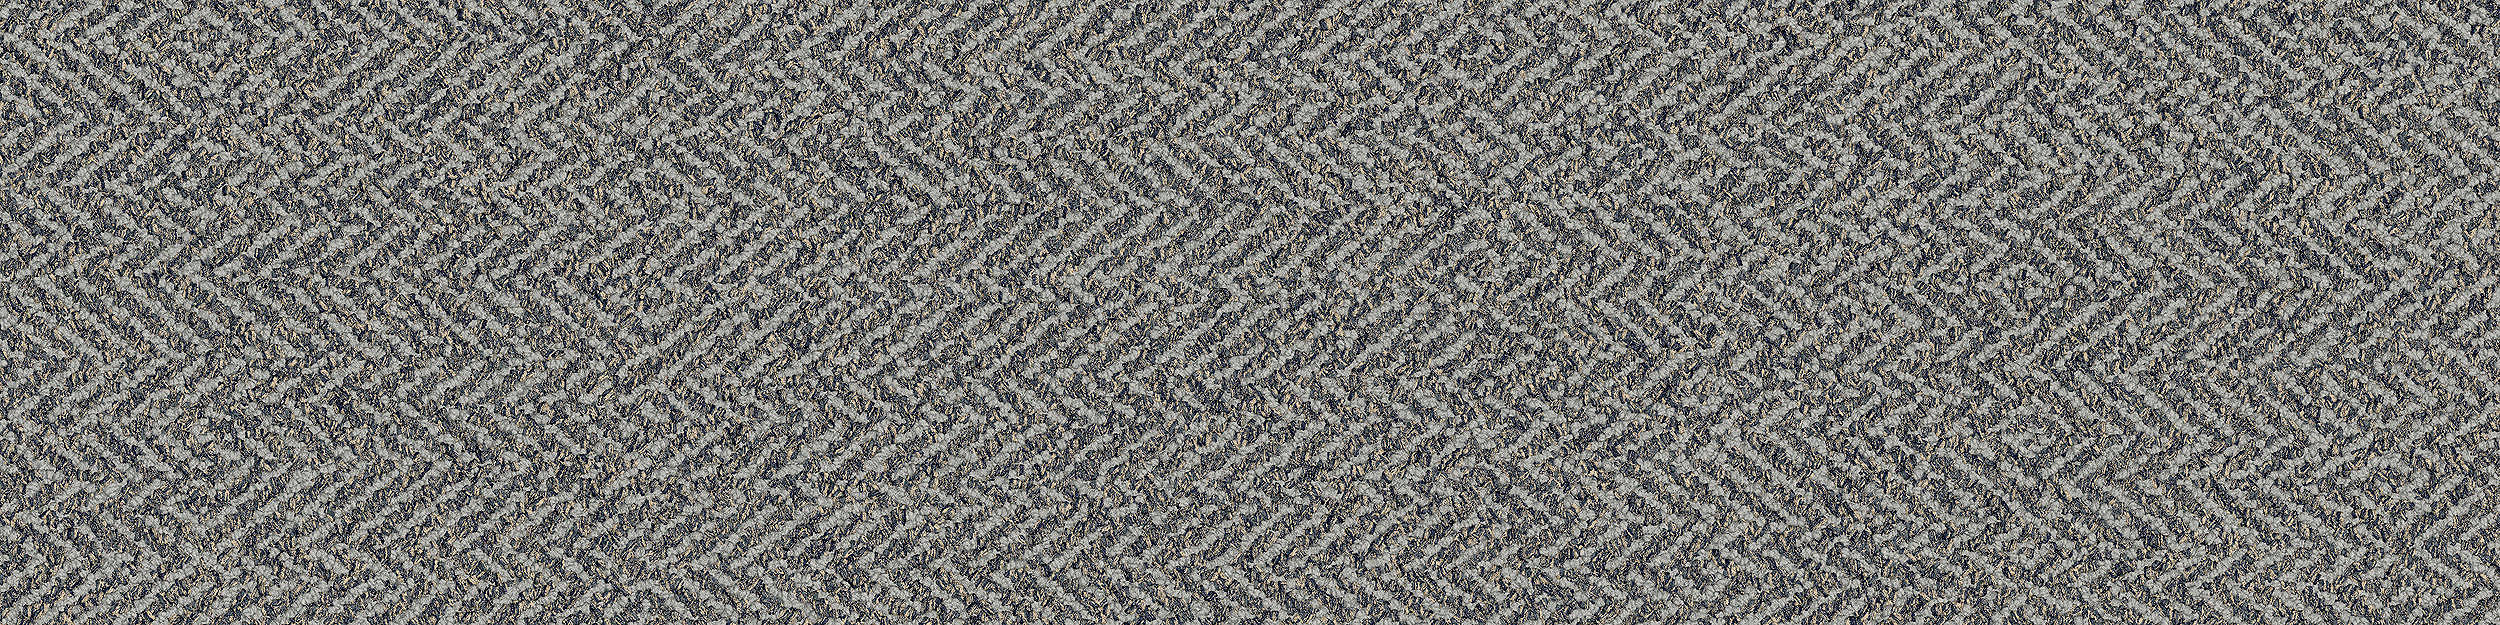 Third Space 308 Carpet Tile in Mist image number 6